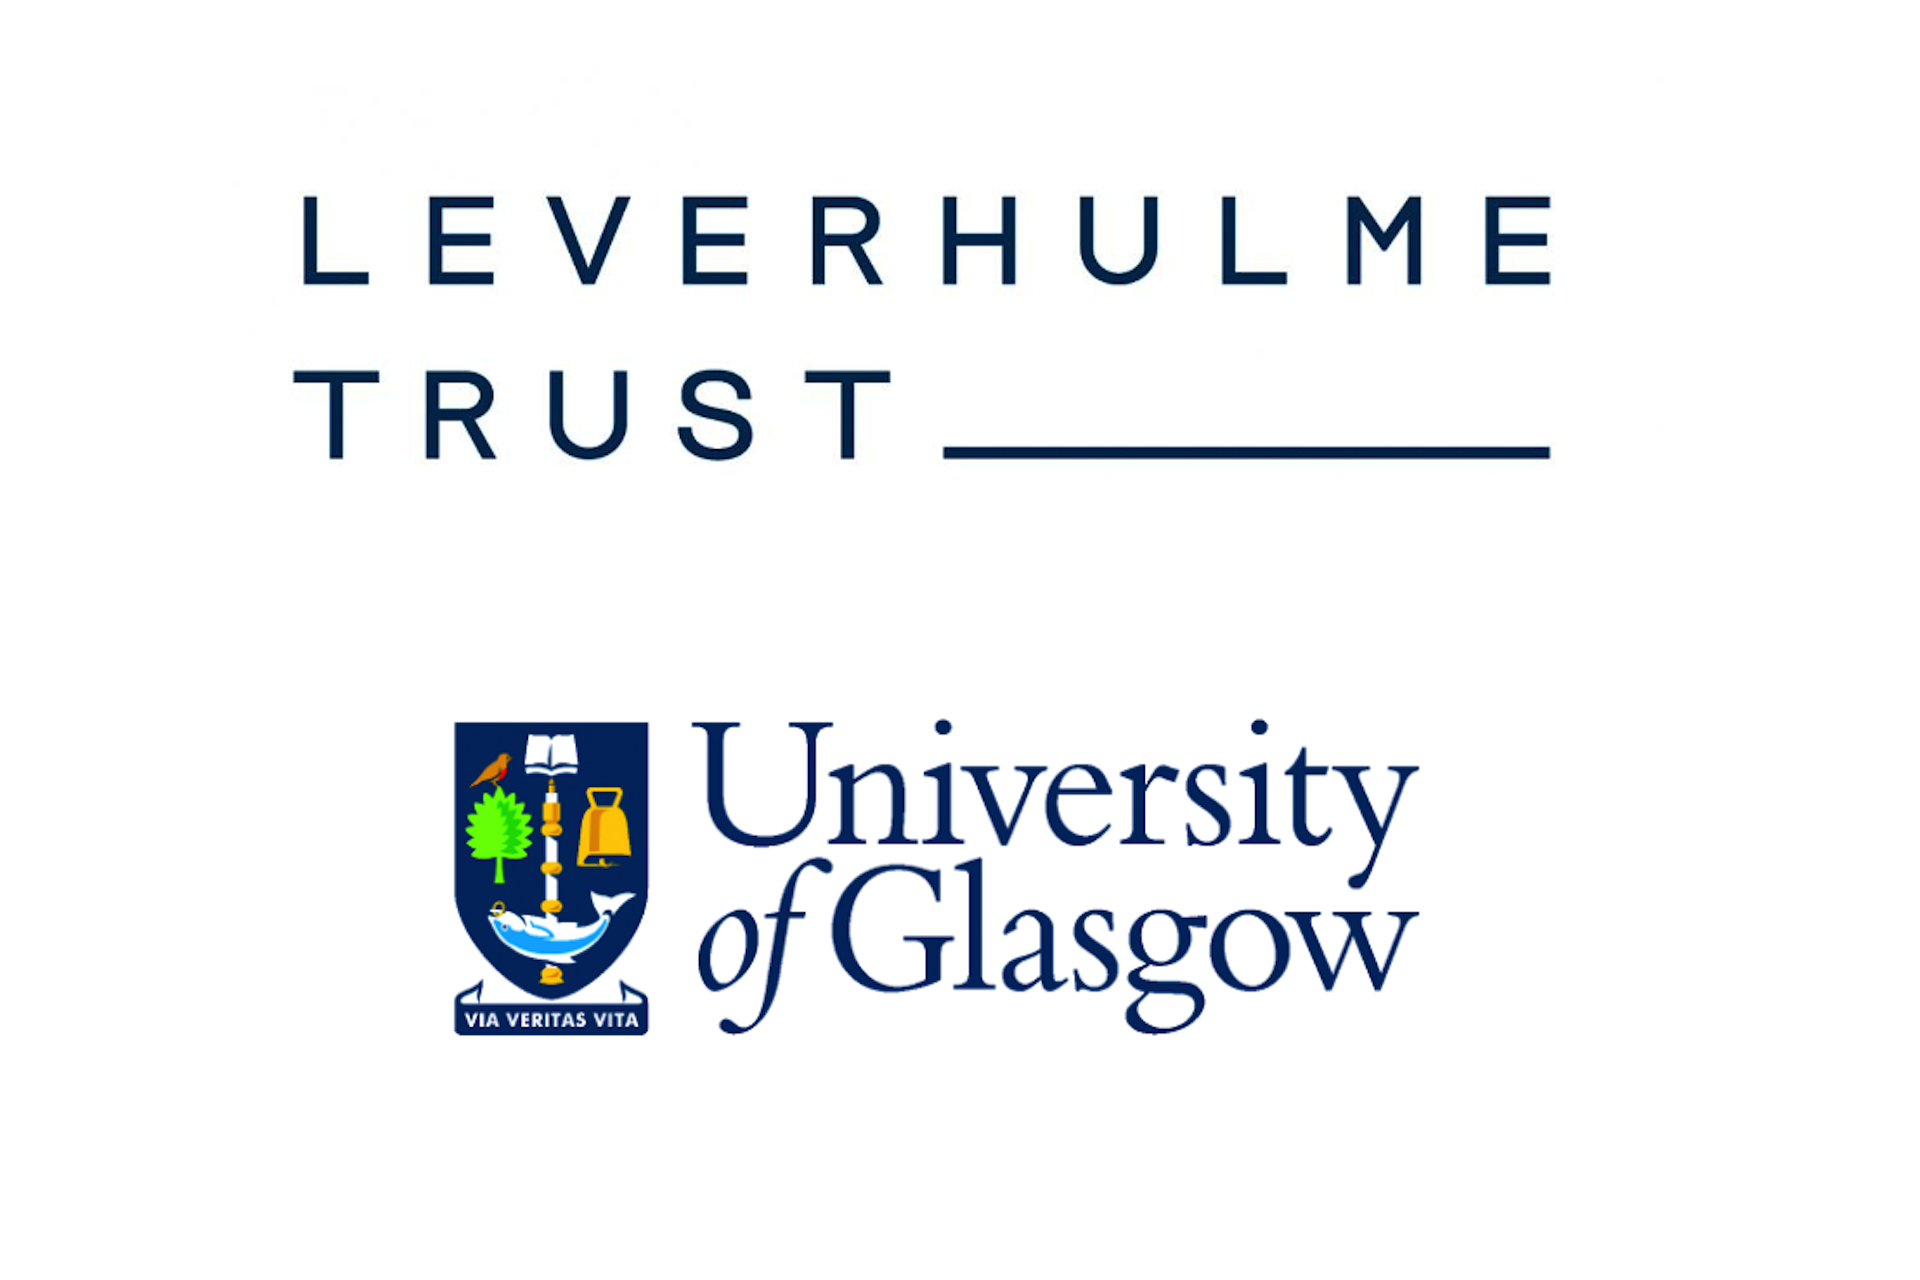 Logos - Leverhulme and University of Glasgow